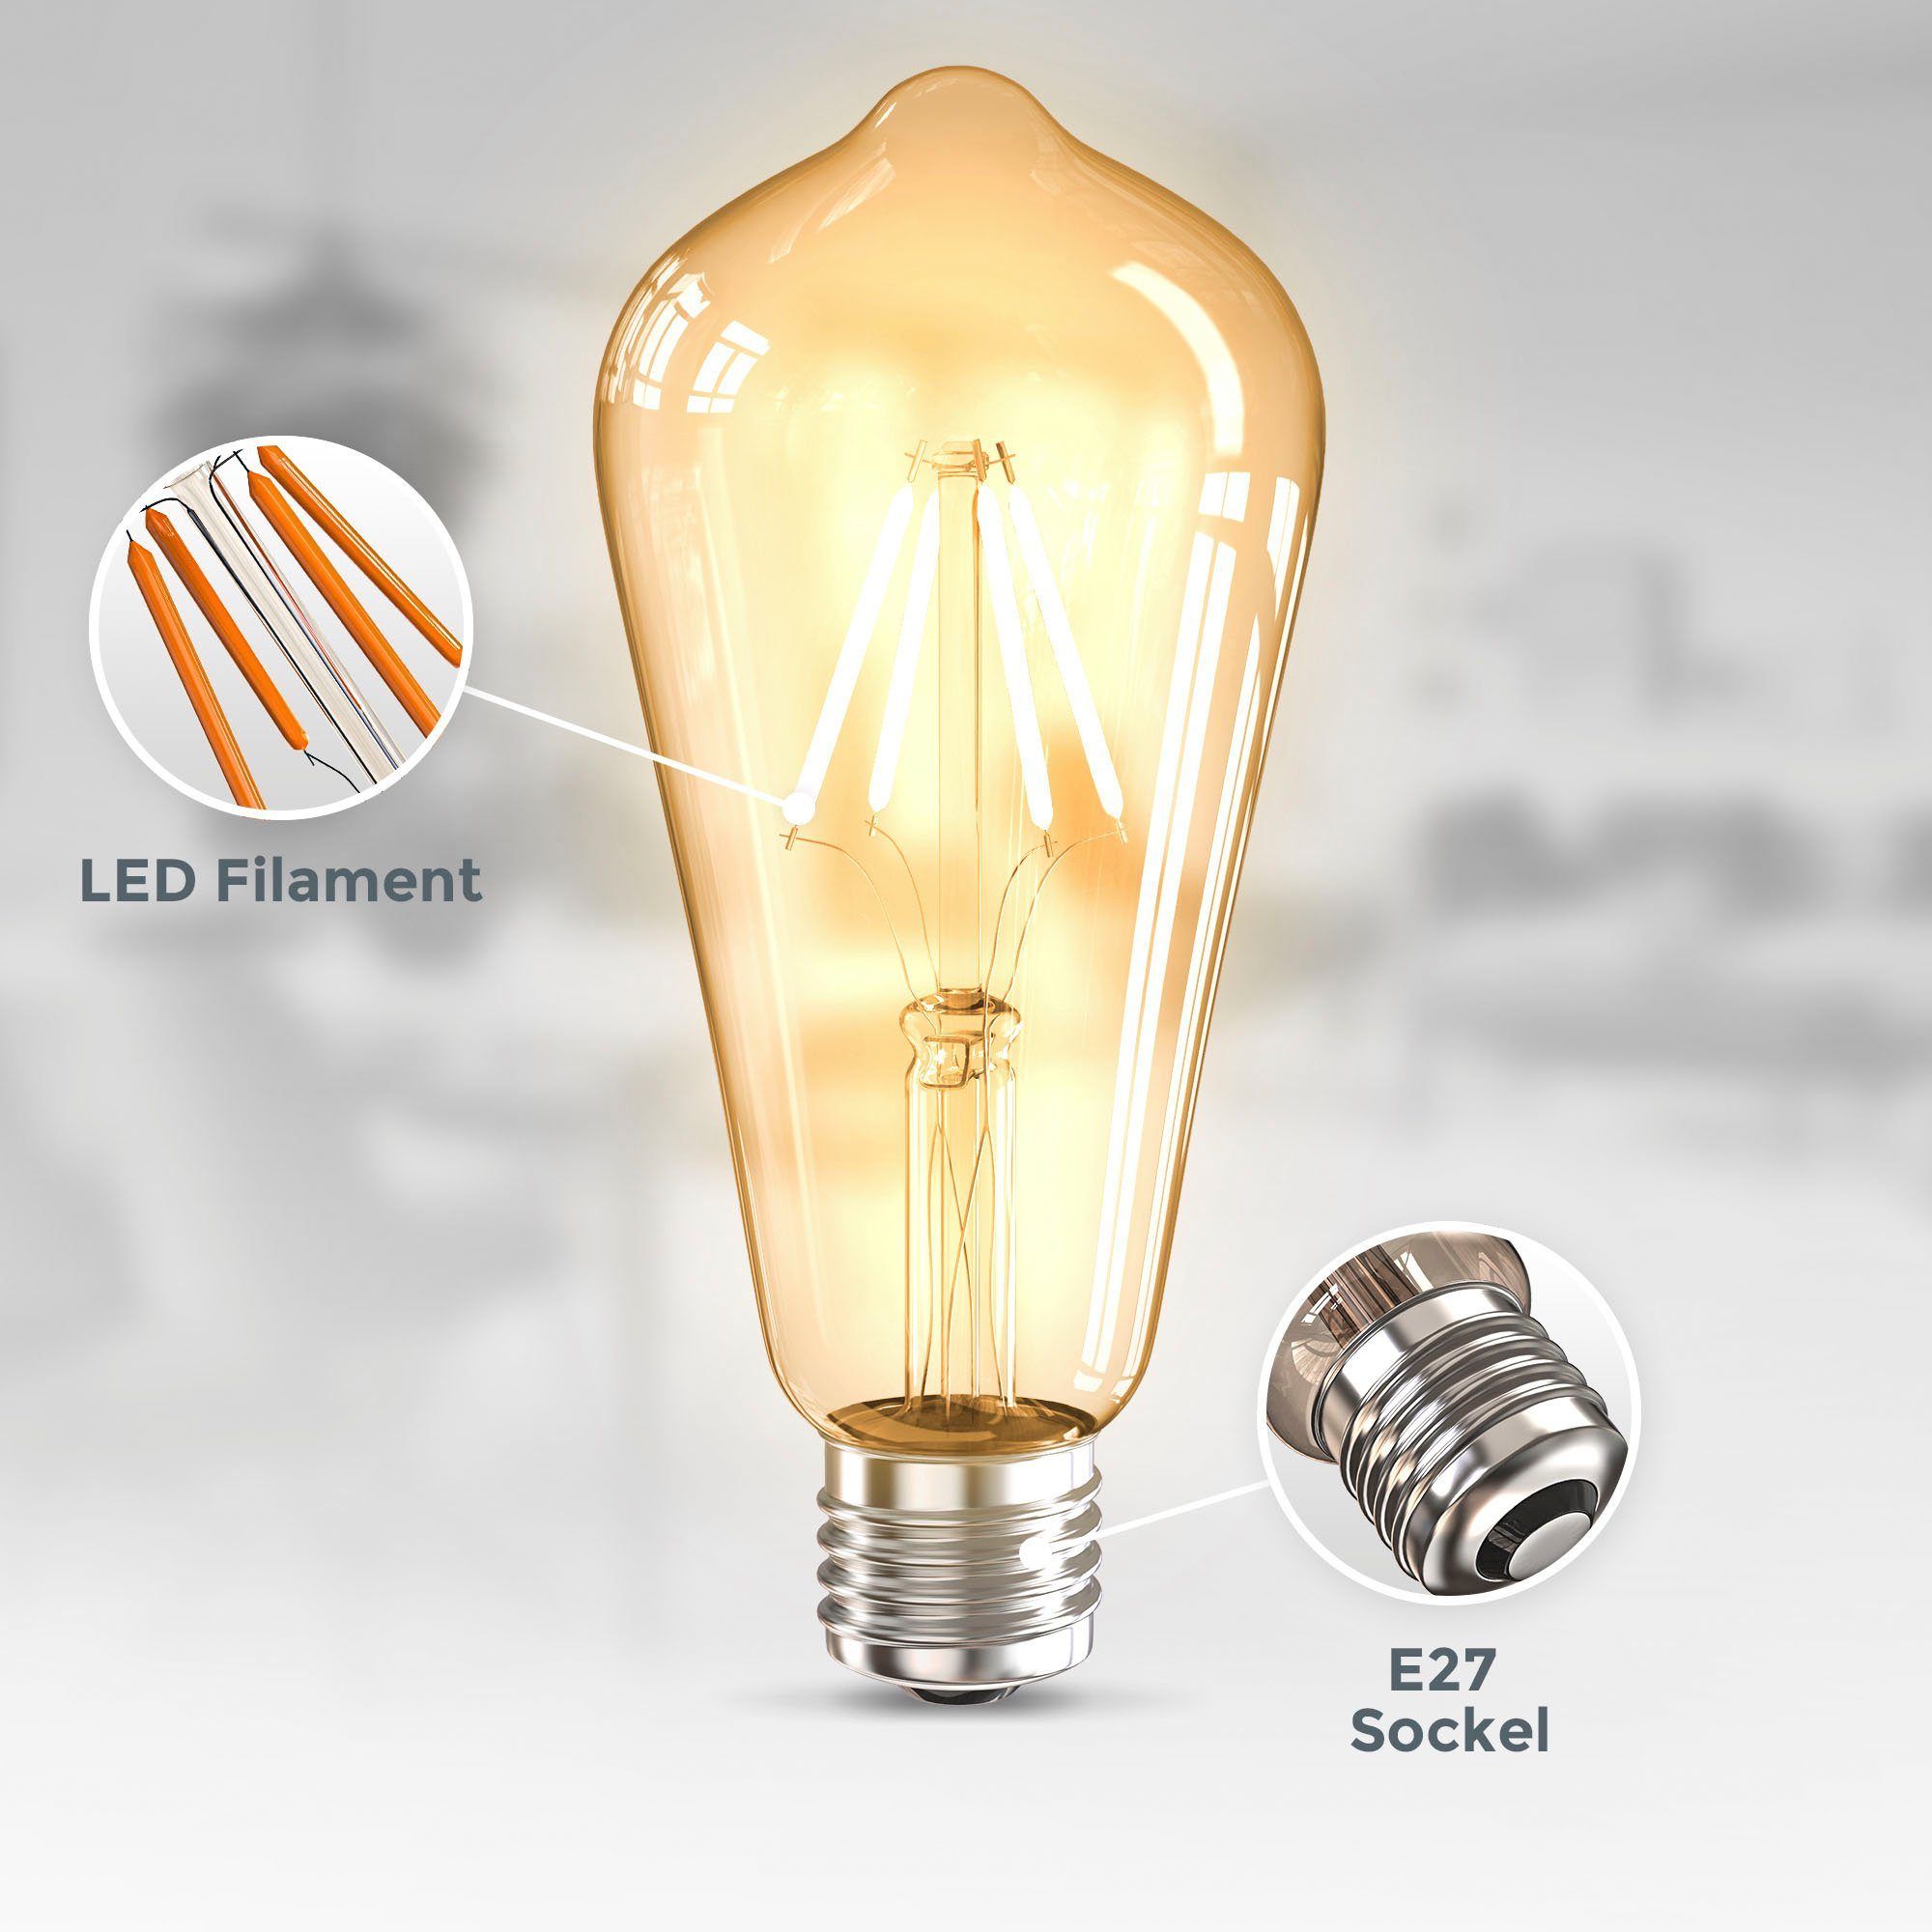 B.K.Licht LED-Leuchtmittel BK_LM1403 LED Leuchtmittel K Warmweiß, ST64, 2.700 Glühbirne Edison E27 Filament St., Set E27, 3 3er Vintage